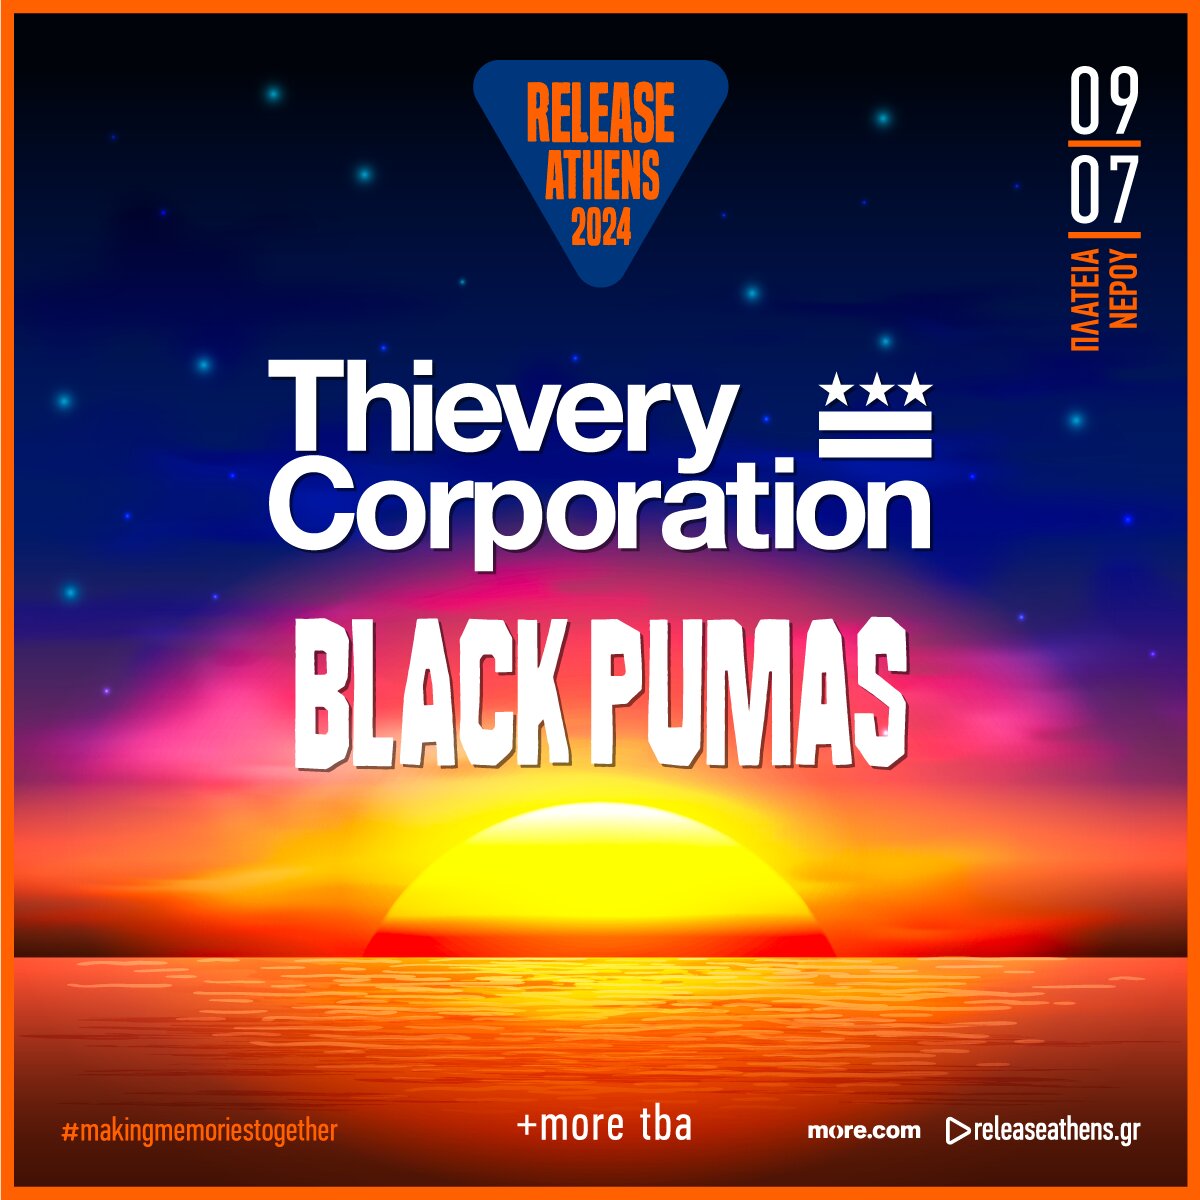 Thievery Corporation Black Pumas socials post